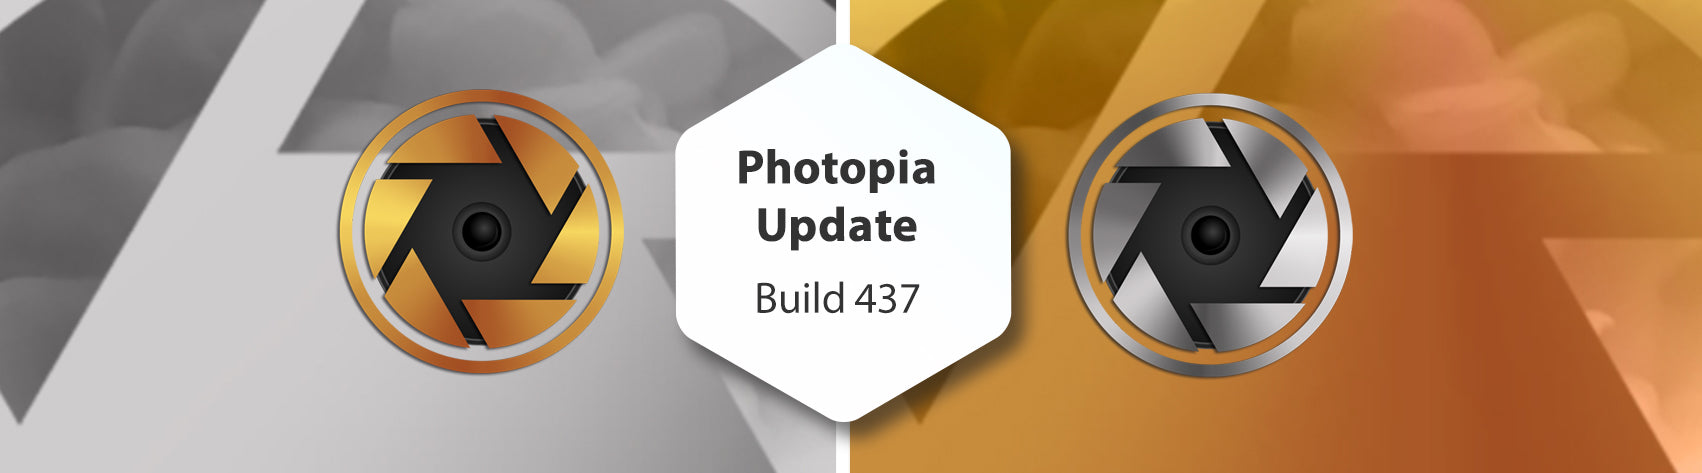 Photopia Update 437